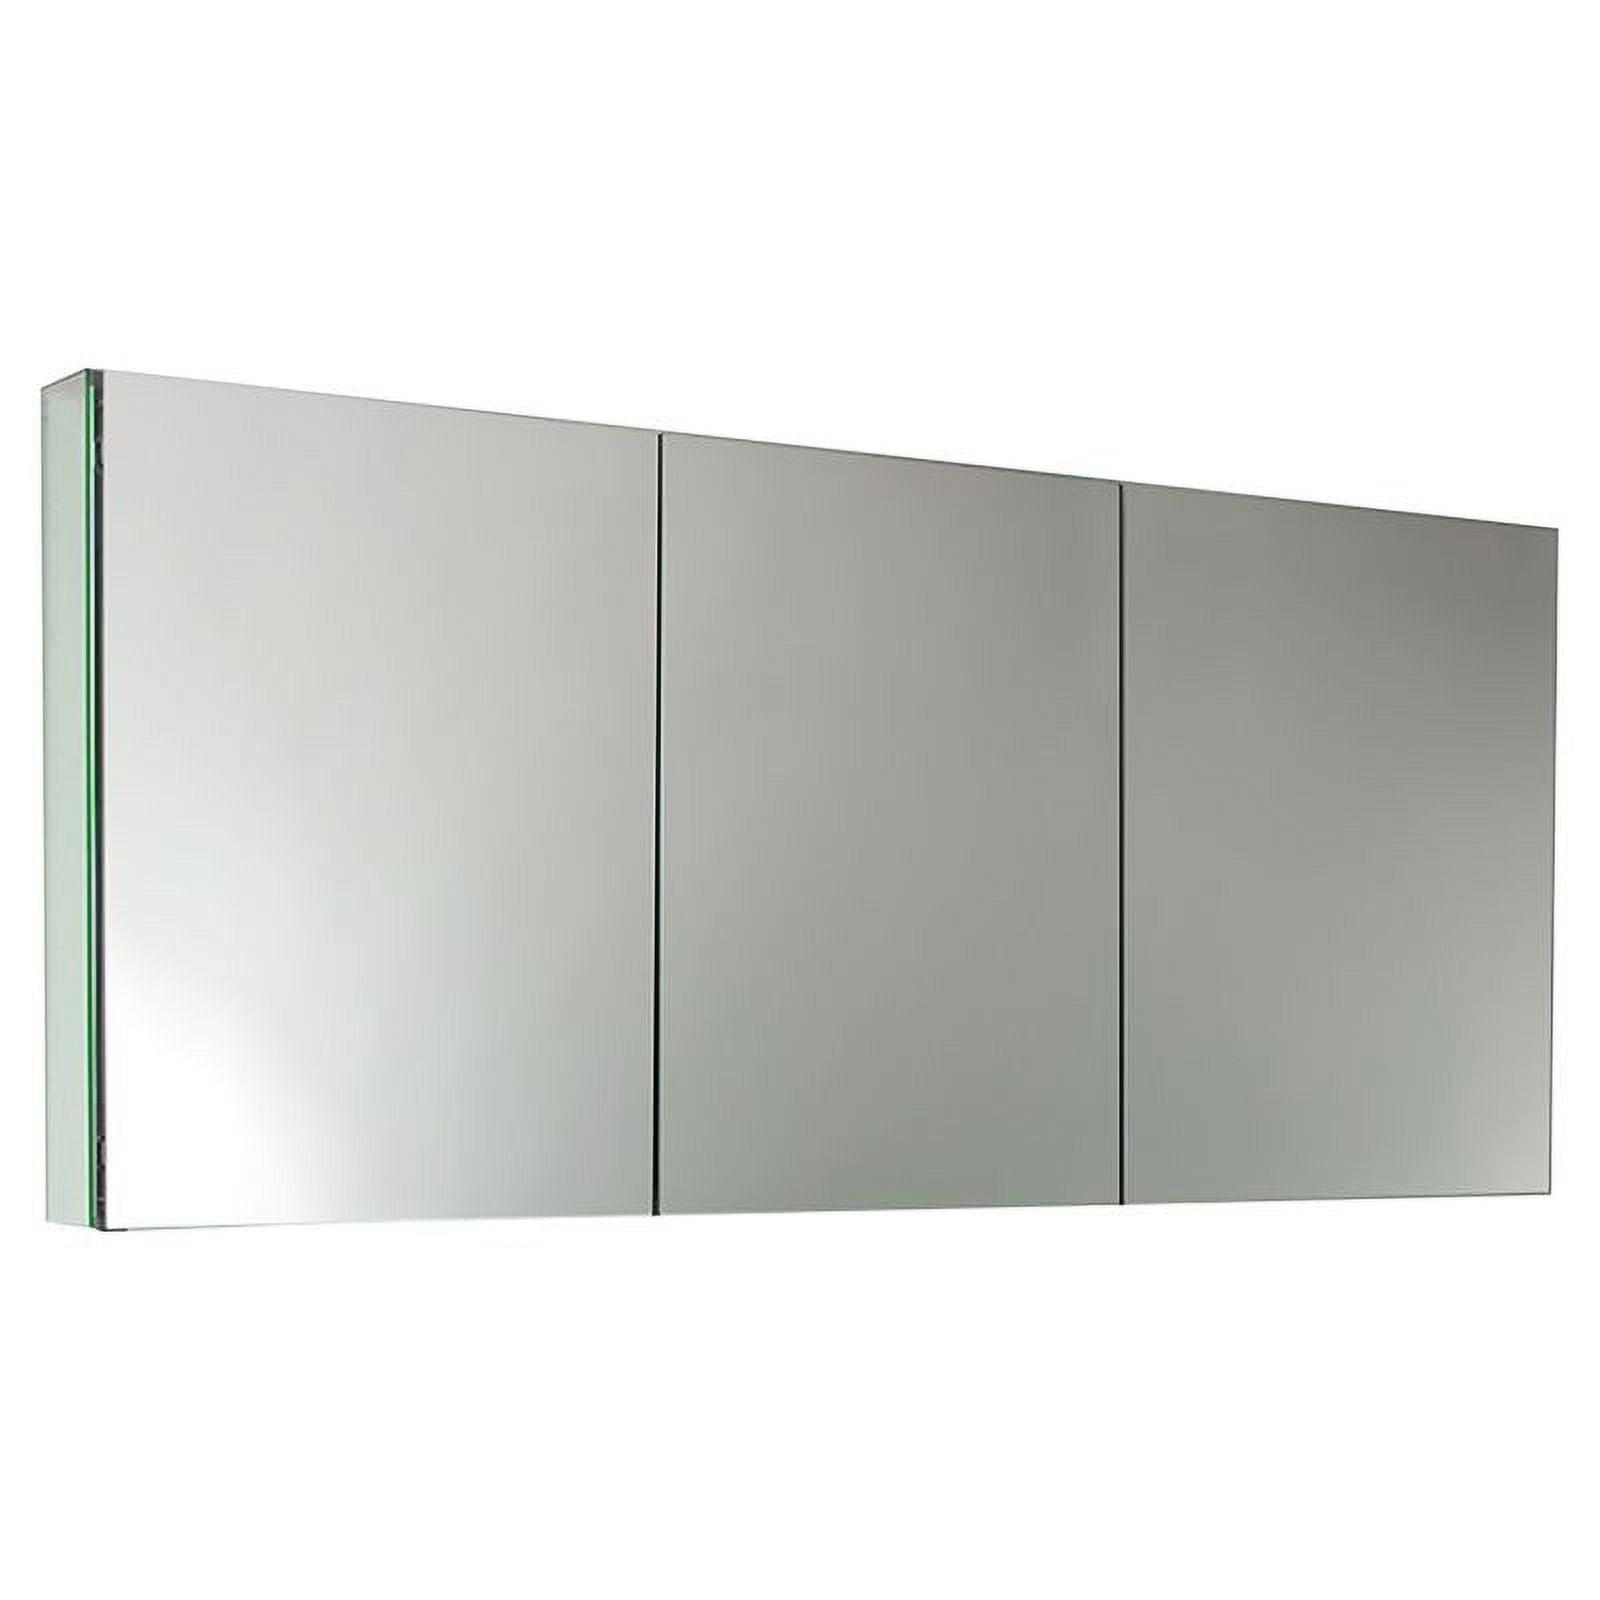 Contemporary 59" Wide Frameless Bathroom Medicine Cabinet with Interior Mirror